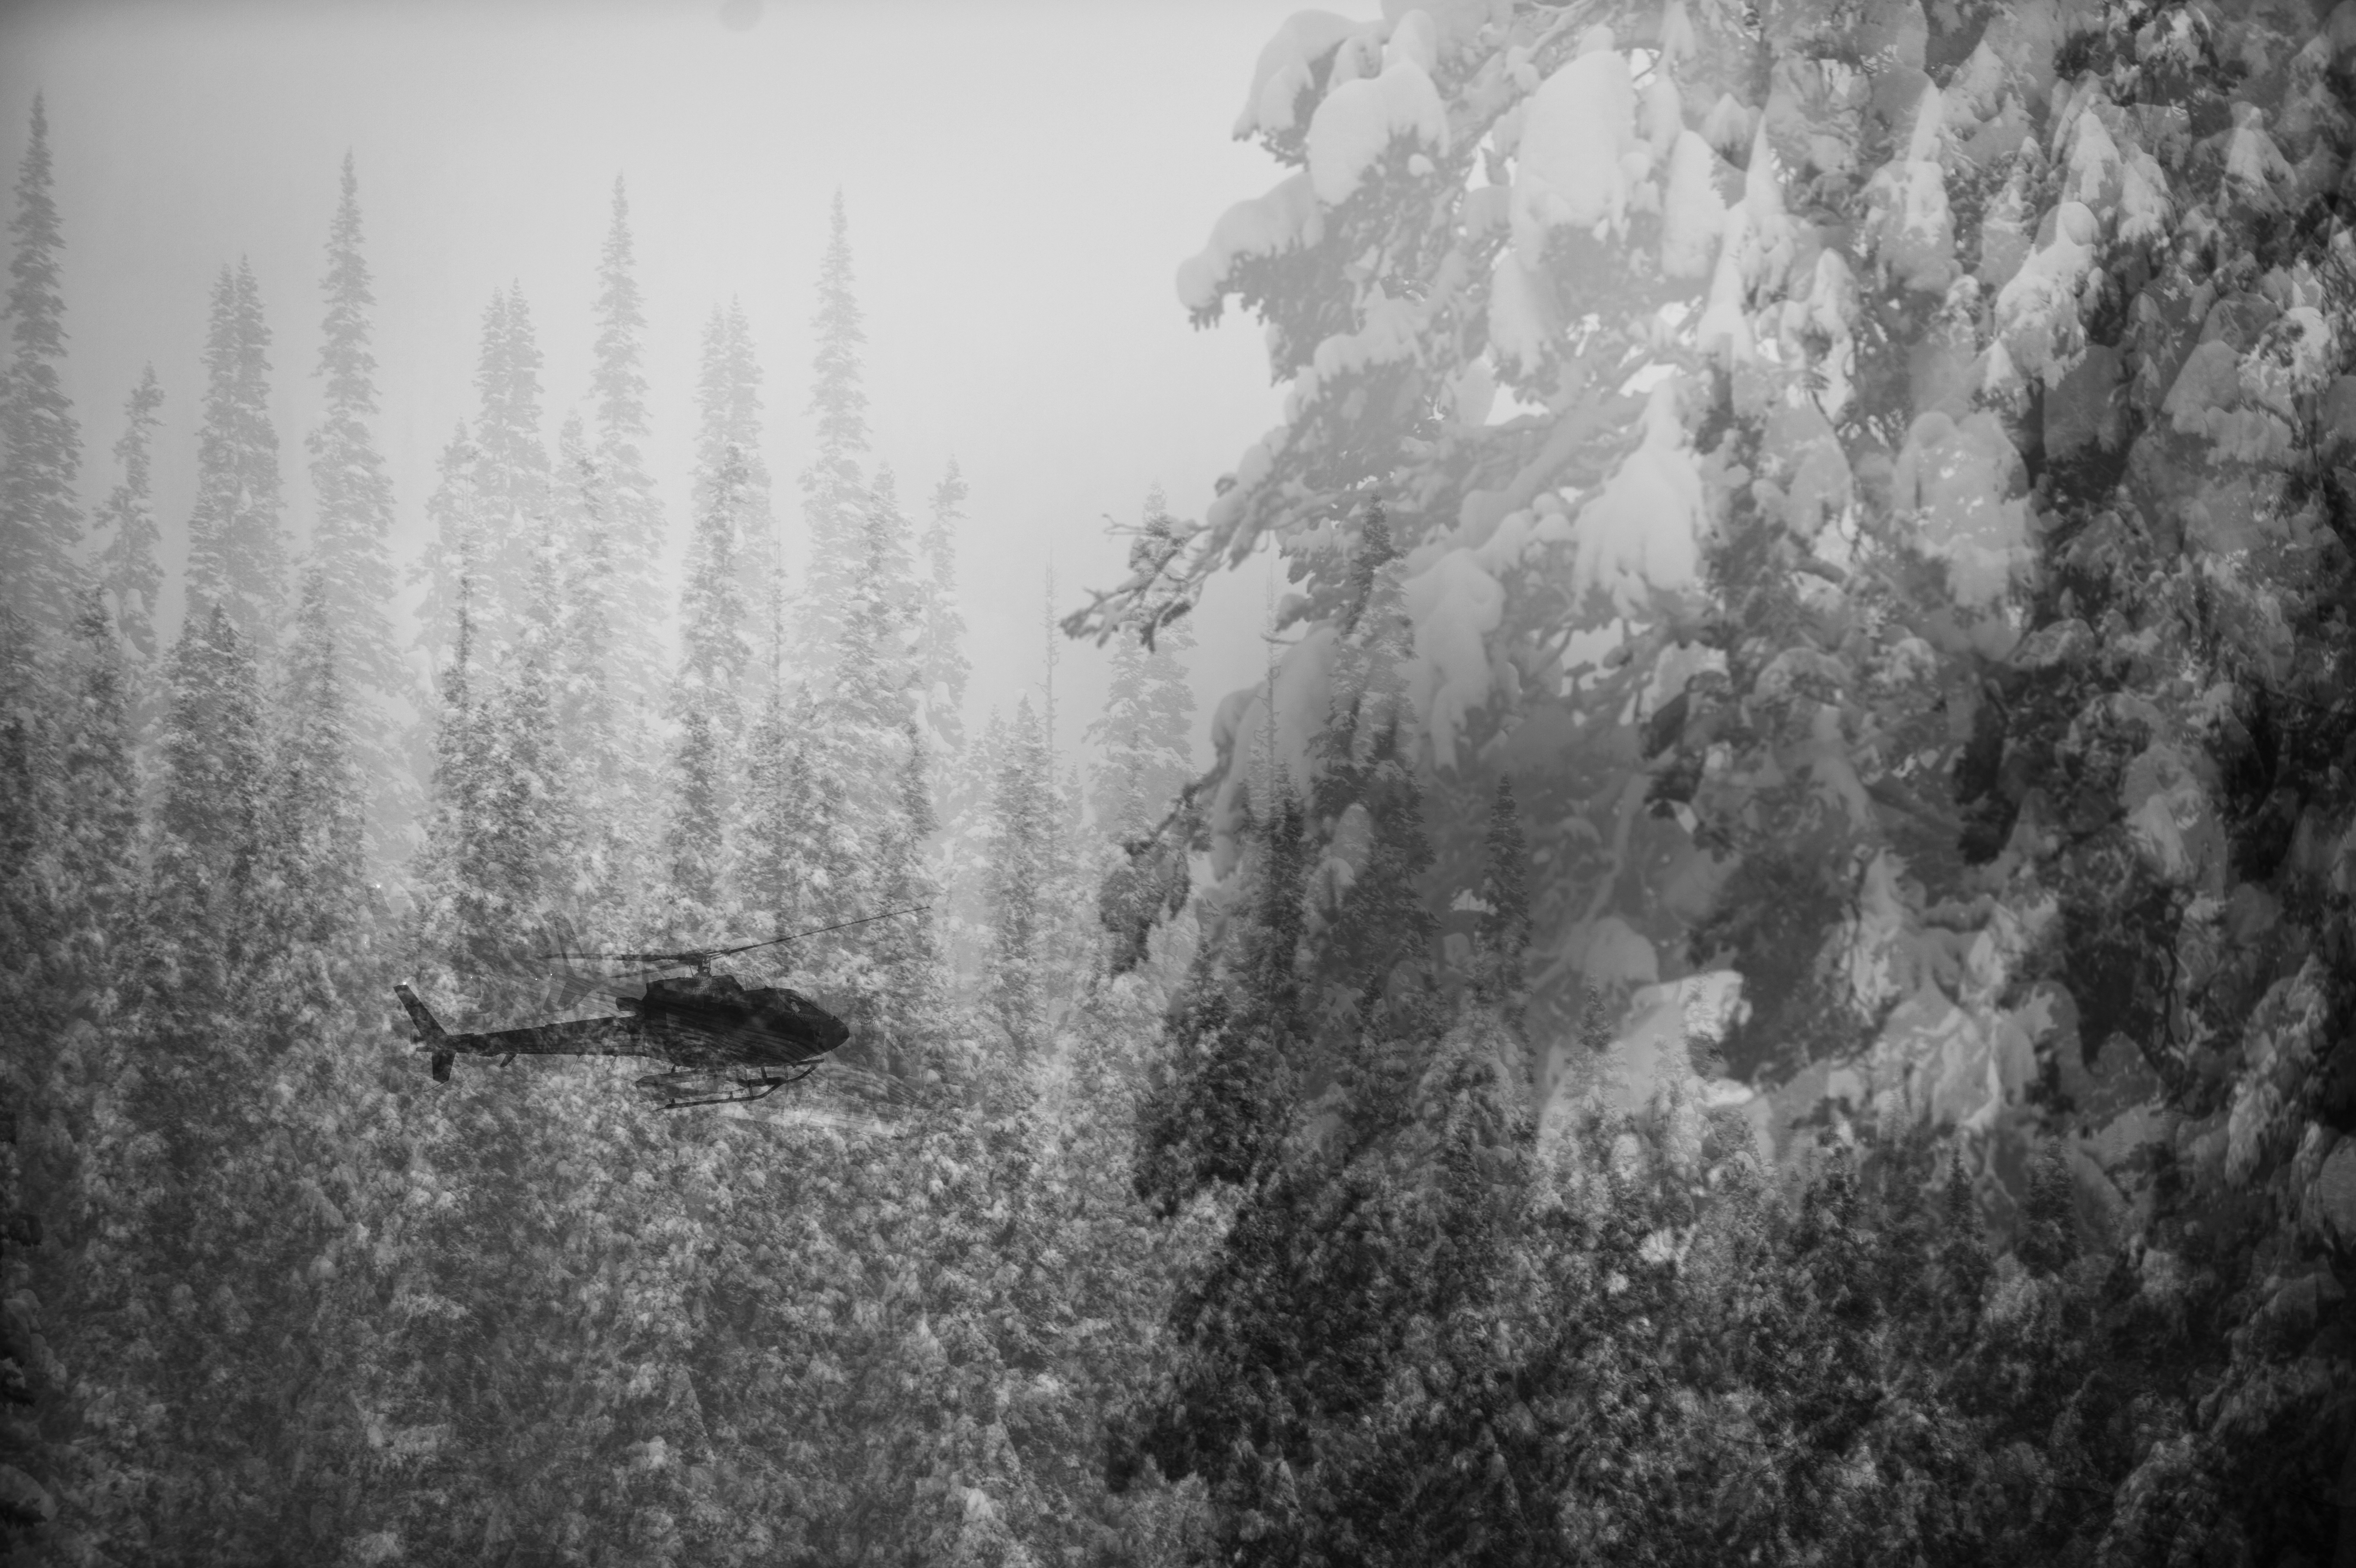 Heli skiing photo by Reuben Krabbe